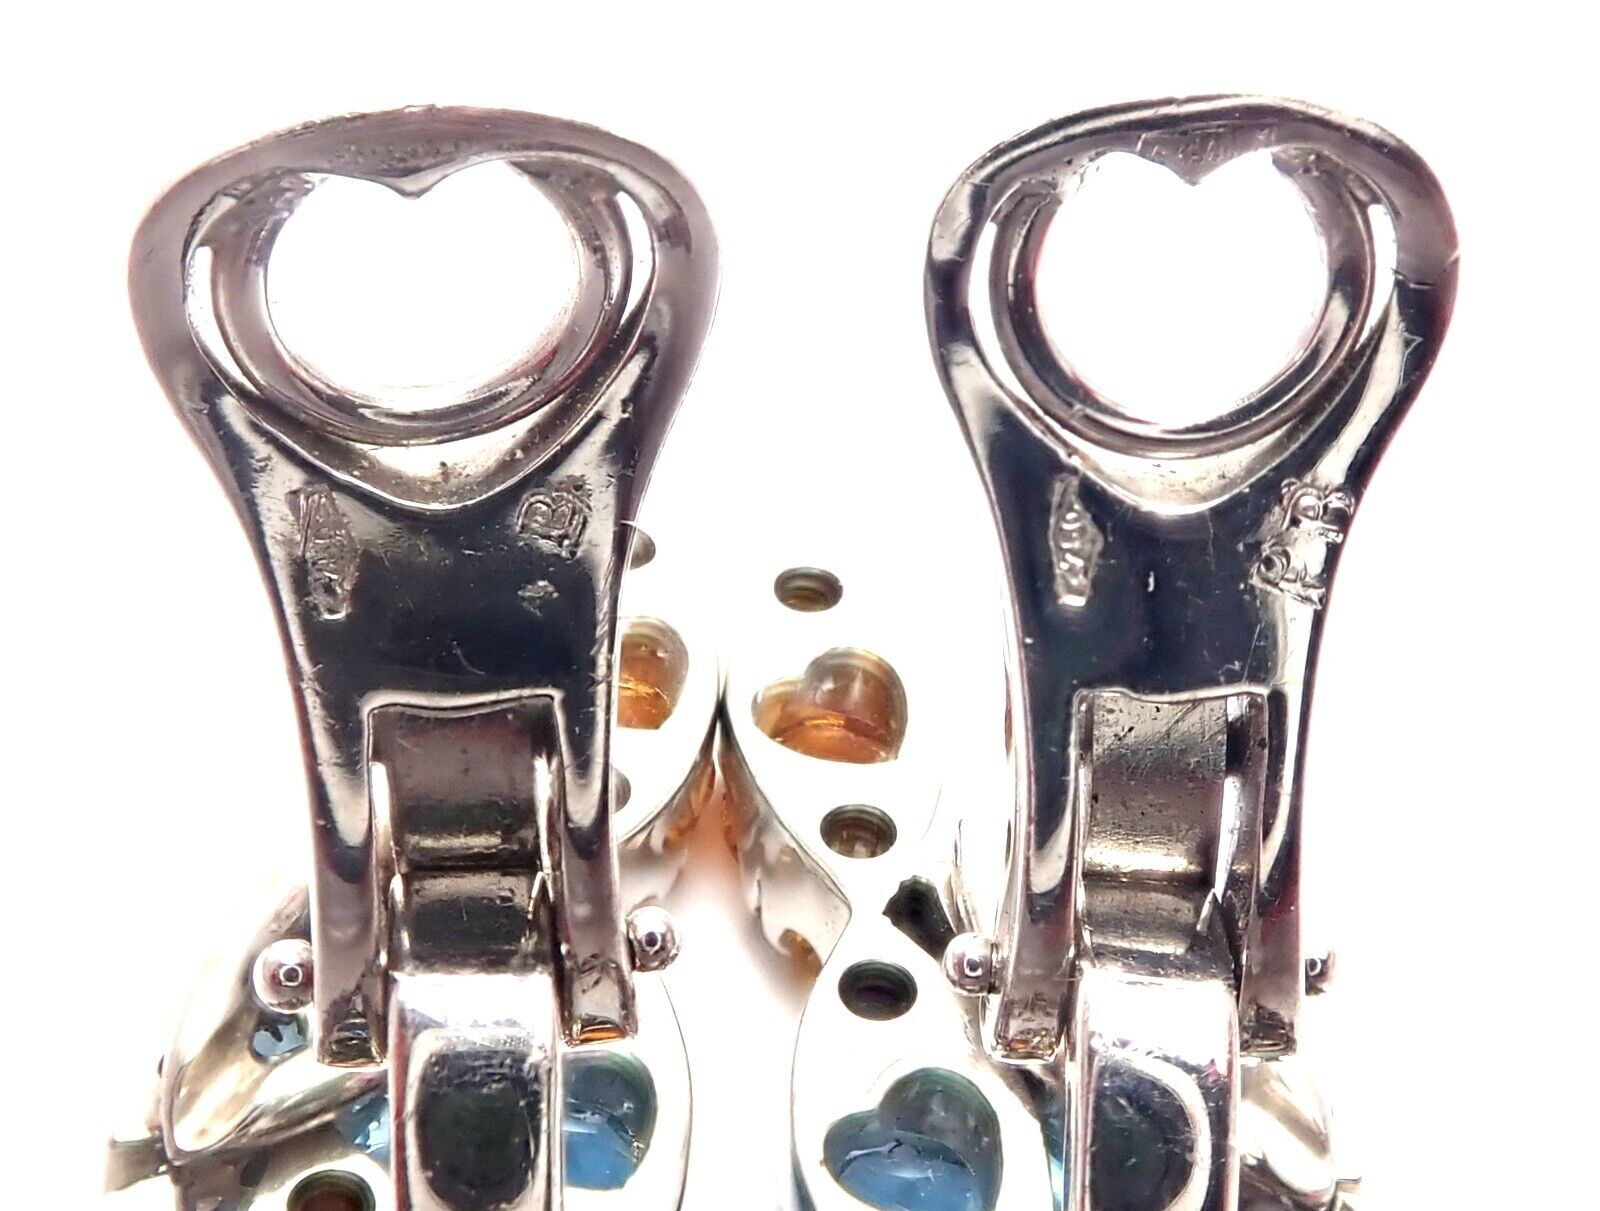 Pasquale Bruni Jewelry & Watches:Fine Jewelry:Earrings Authentic! Pasquale Bruni Ghirlanda 18k Gold Sapphire Topaz Citrine Earrings